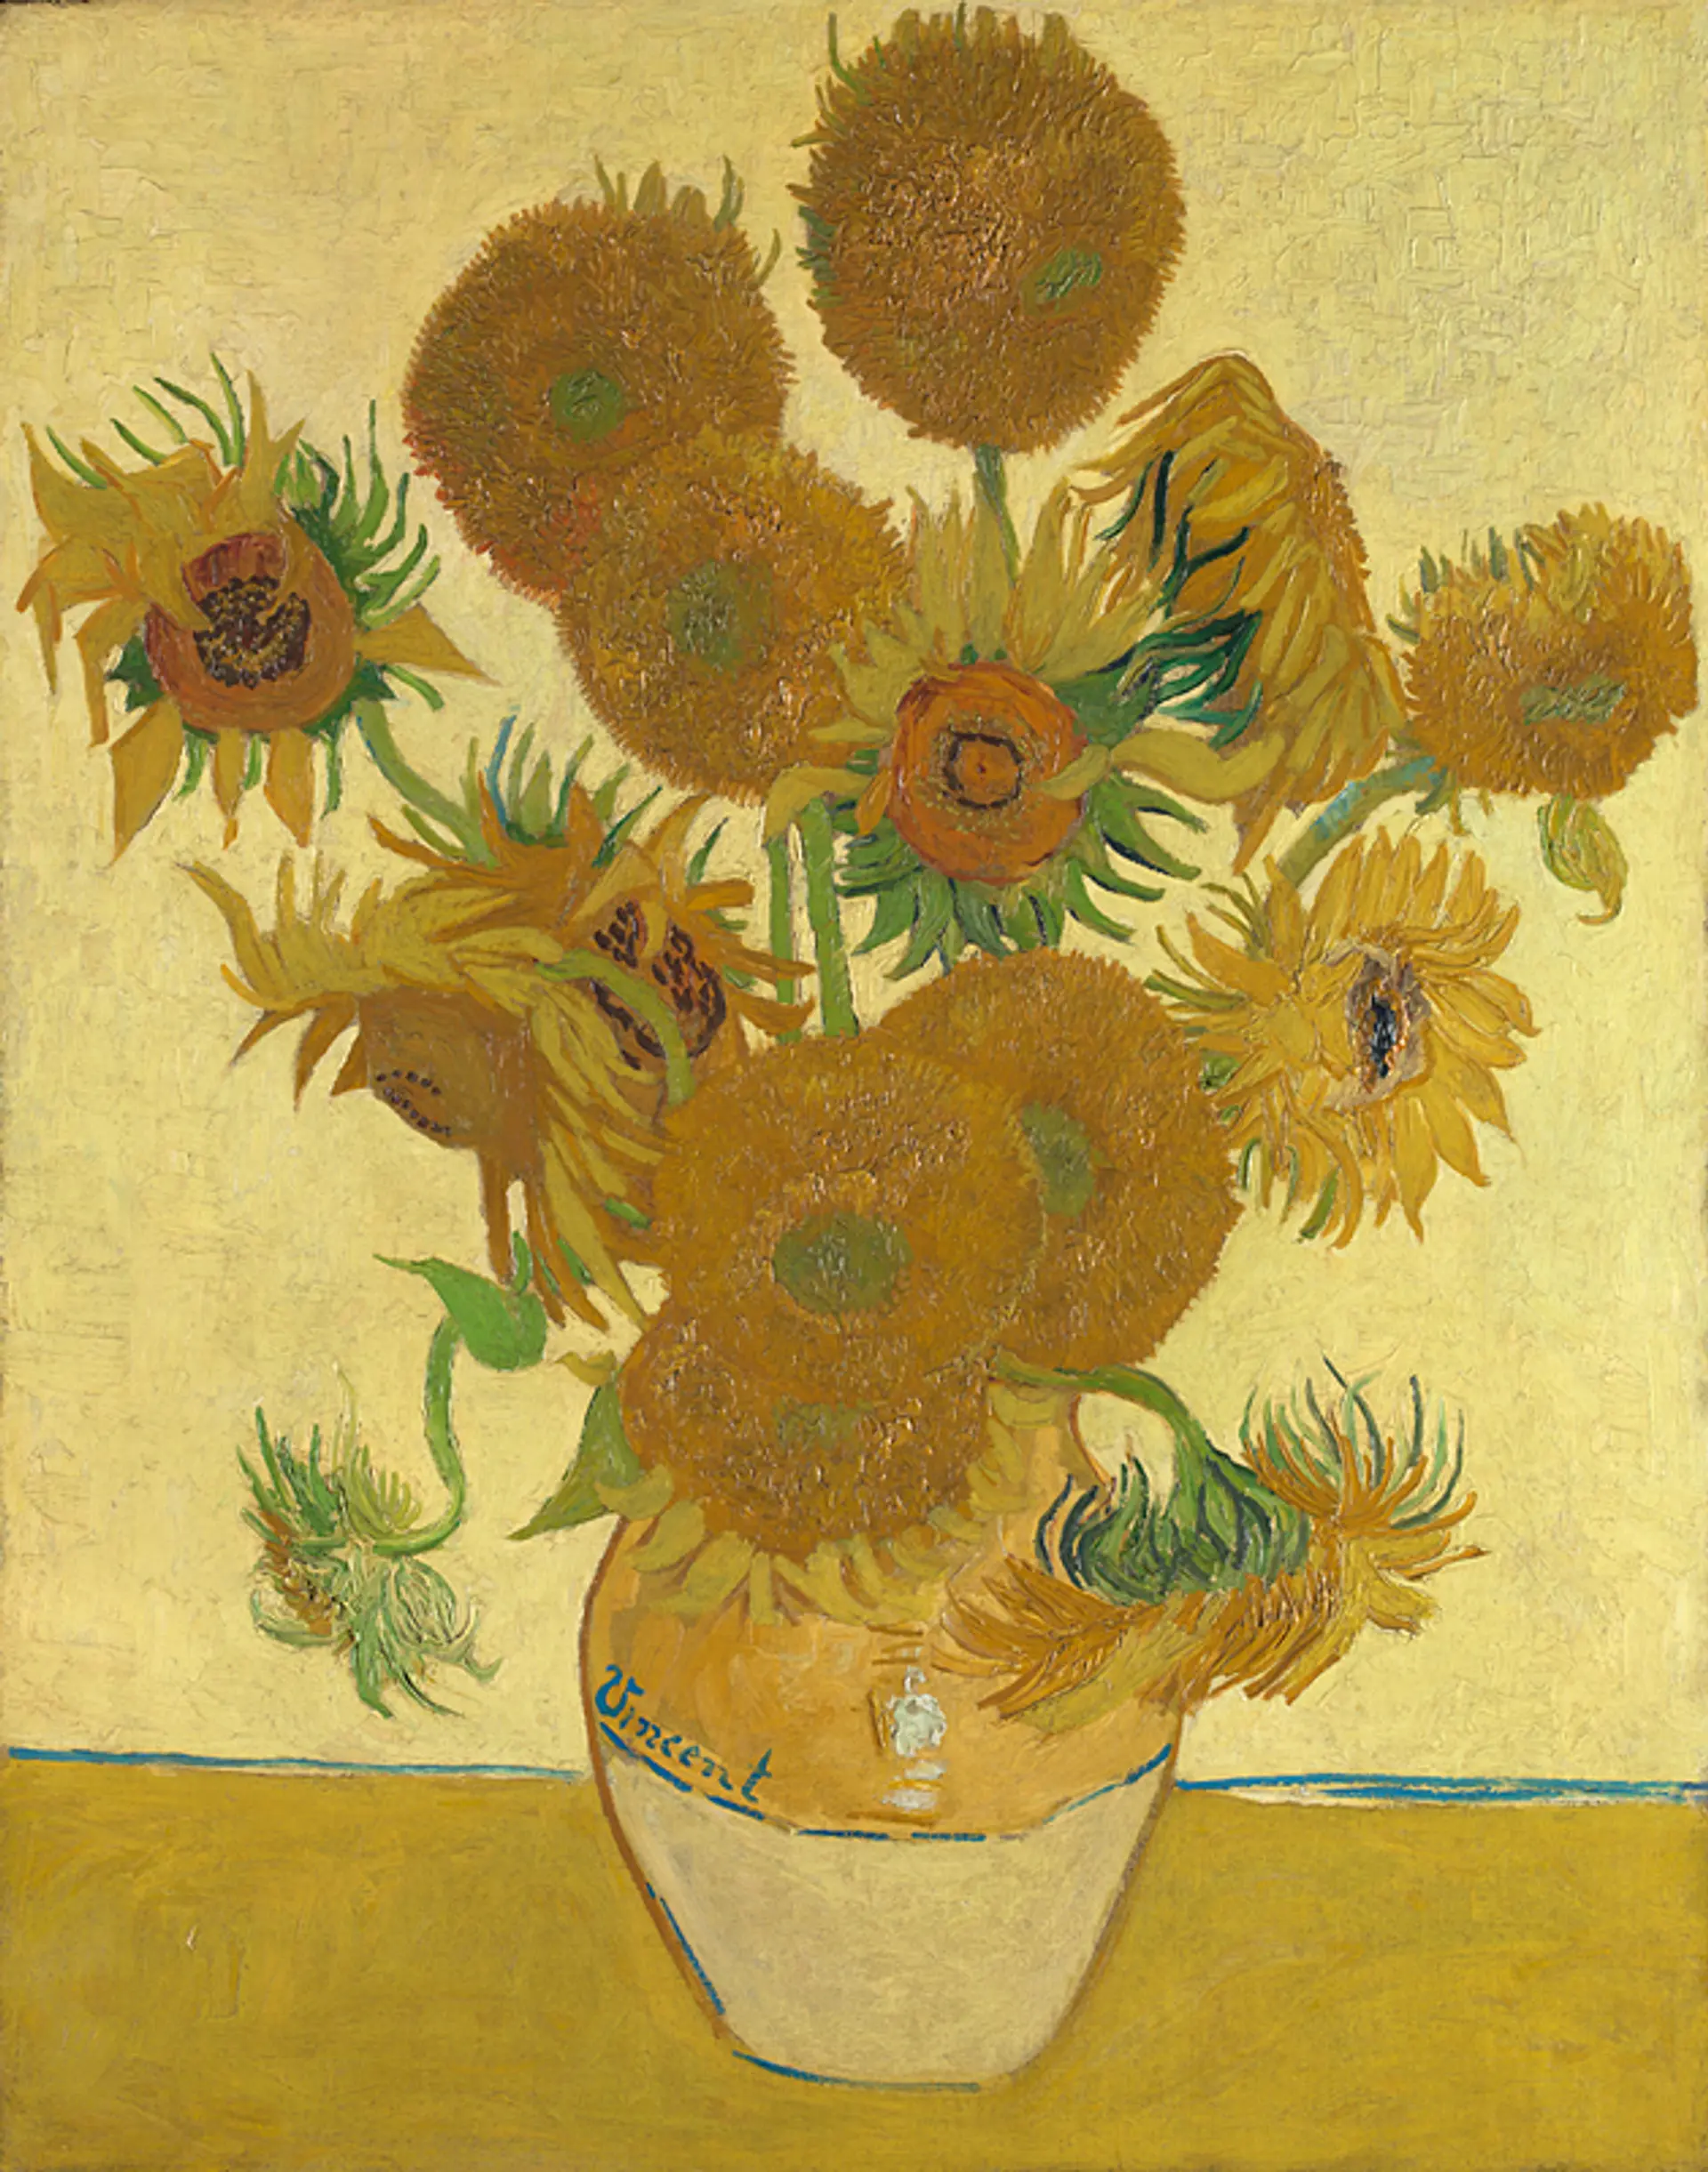 Van Gogh’s Sunflowers (August 1888)